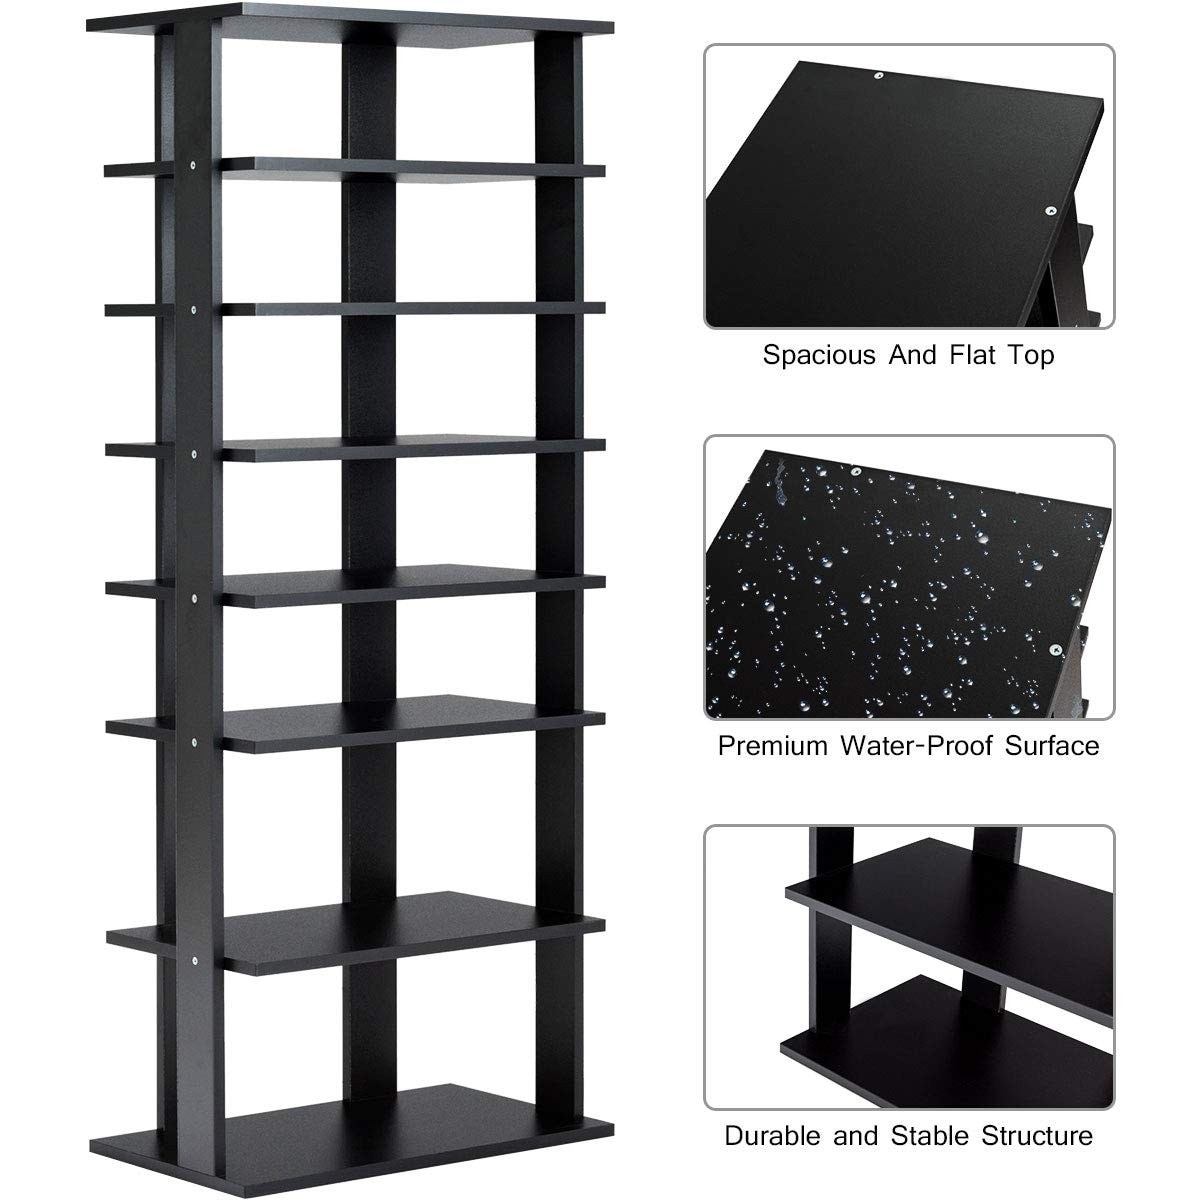 https://ak1.ostkcdn.com/images/products/is/images/direct/6f3b3d6565348edcad208c68269e17179ba60249/7-Tier-Dual-Shoe-Rack-Free-Standing-Shelves-Storage-Shelves-Concise-Black.jpg